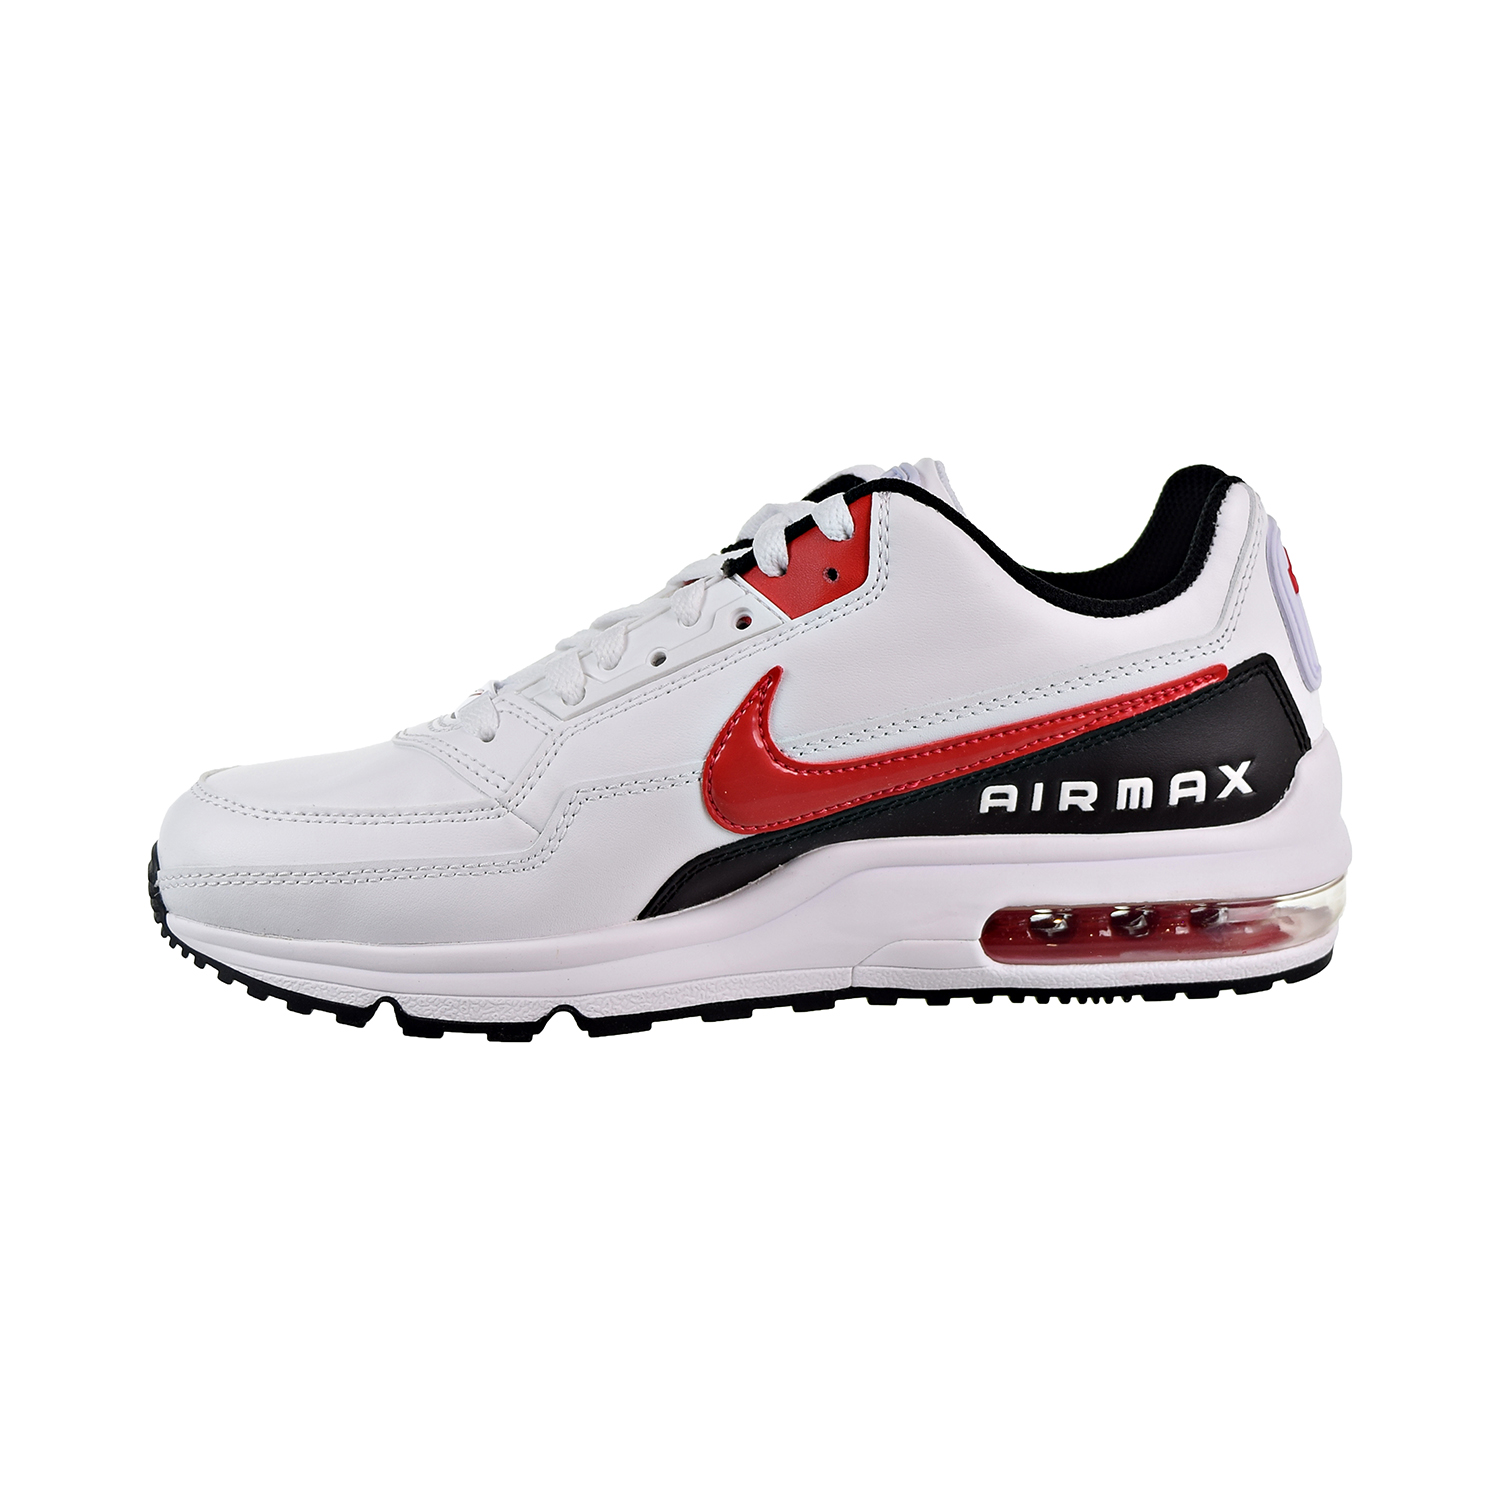 Nike Air Max LTD 3 Men's Shoes White/University Red/Black bv1171-100